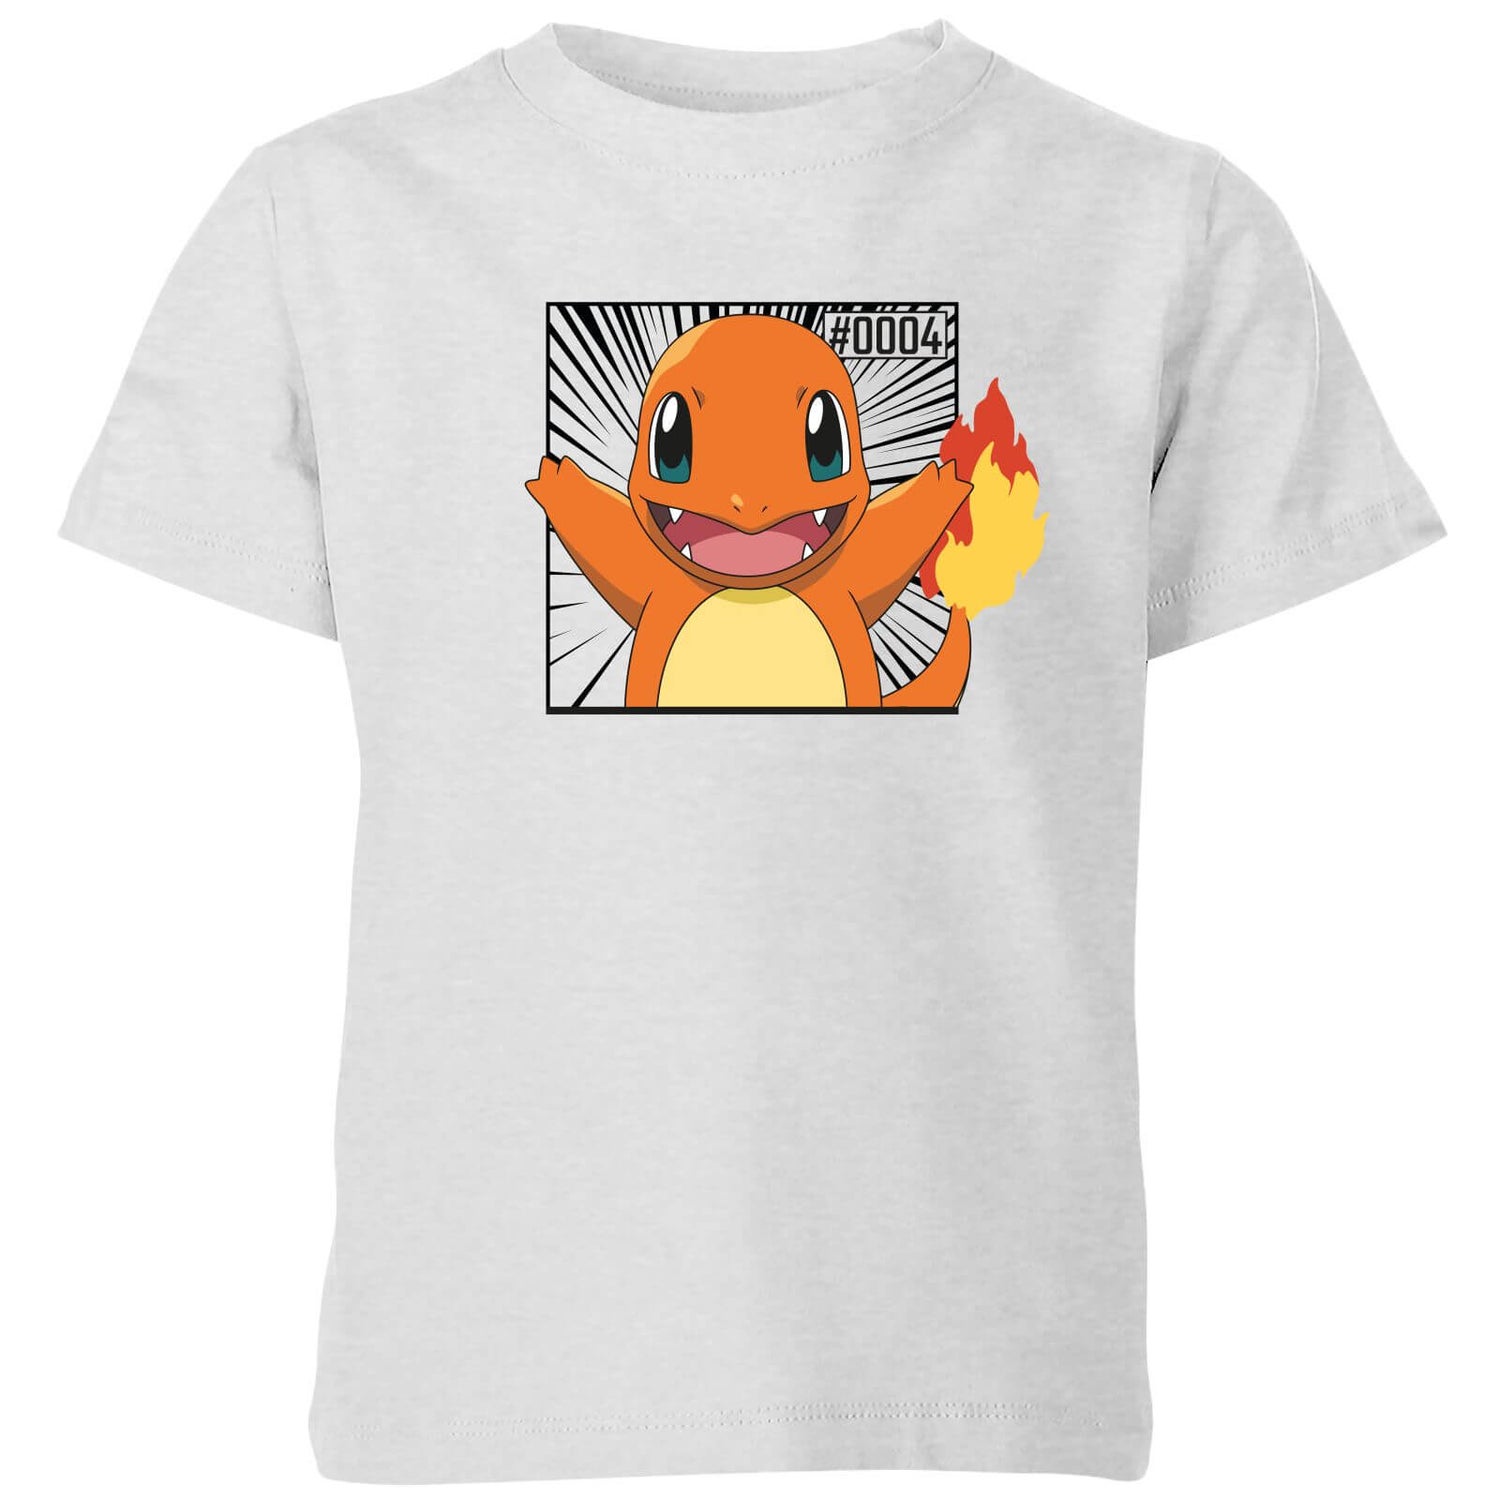 Pokémon Pokédex Charmander #0004 Kids' T-Shirt - Grey